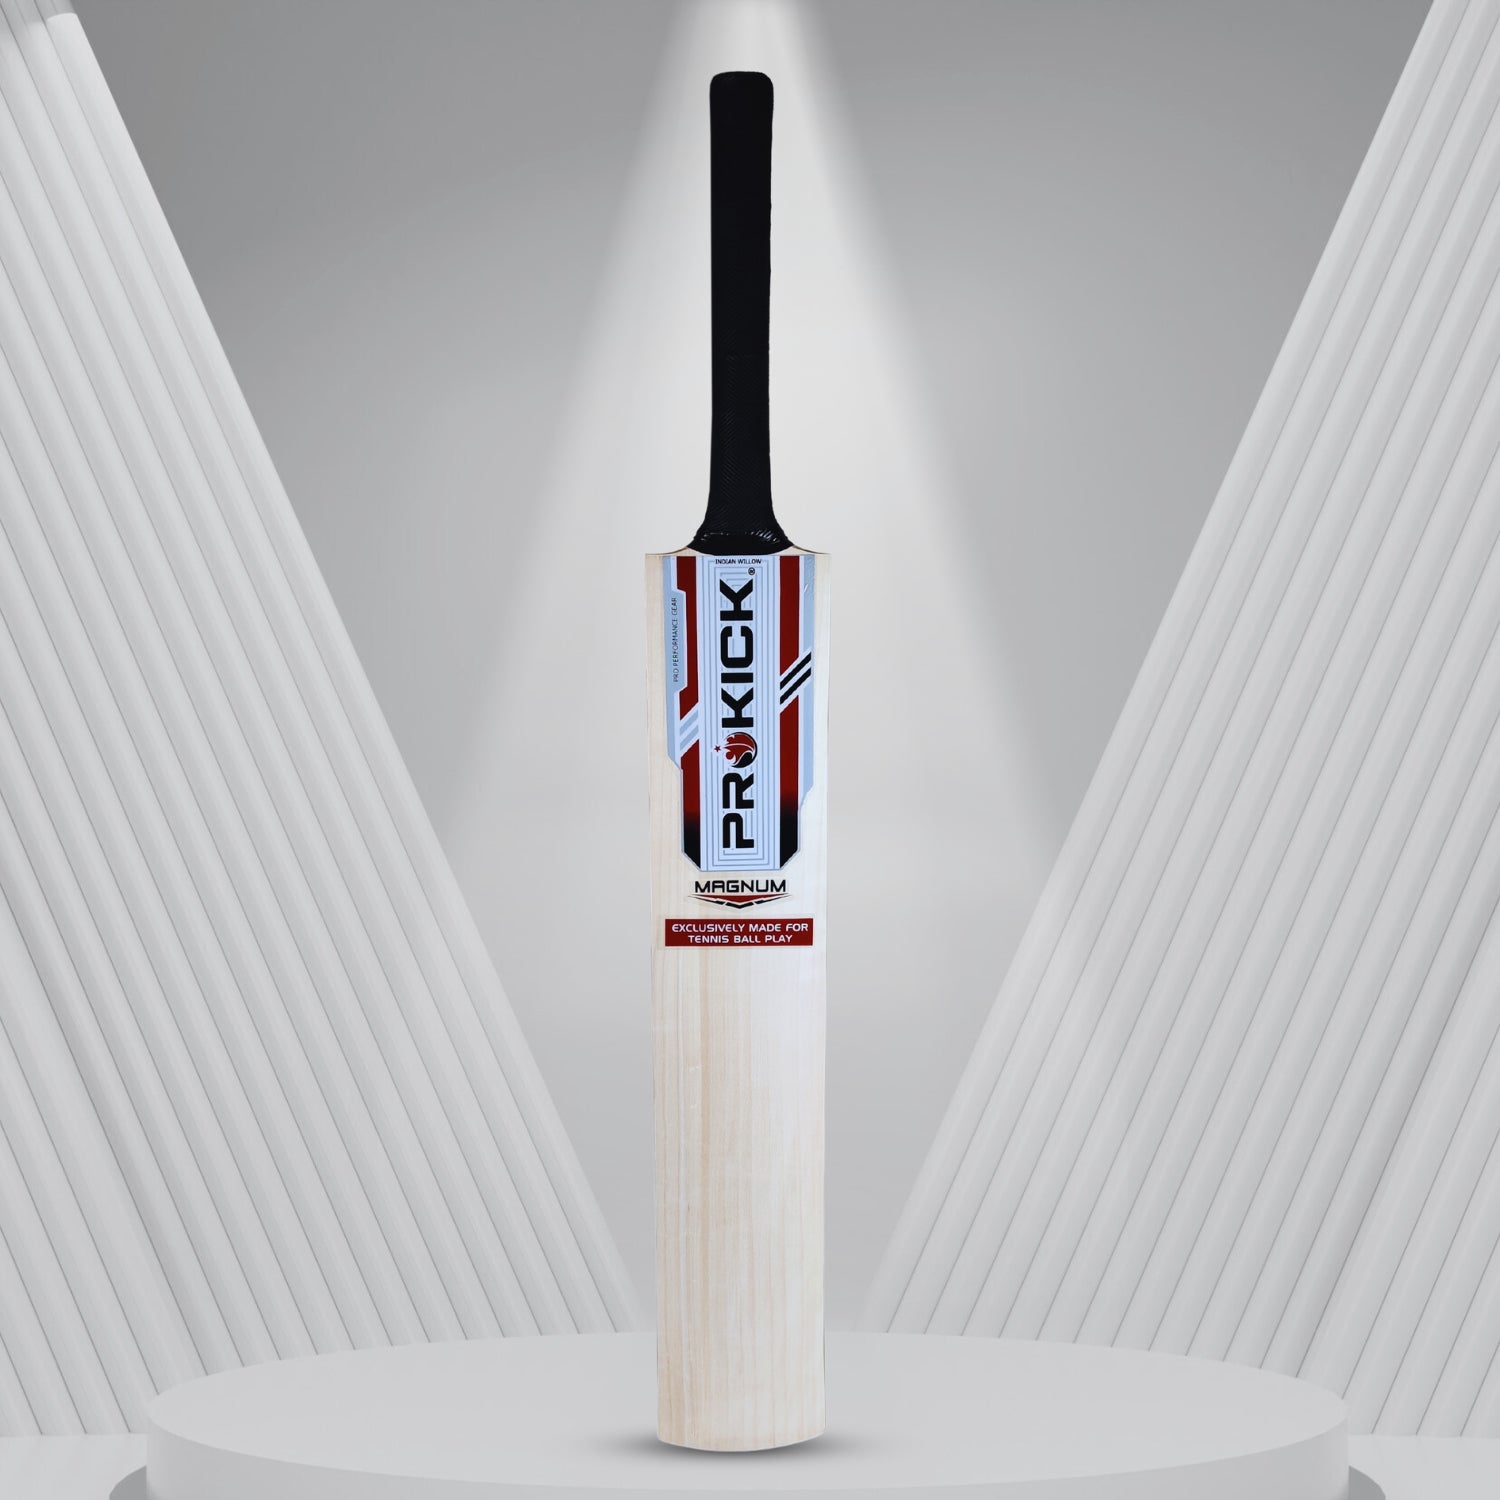 Prokick Magnum Indian Willow Cricket Tennis Ball Bat - Best Price online Prokicksports.com